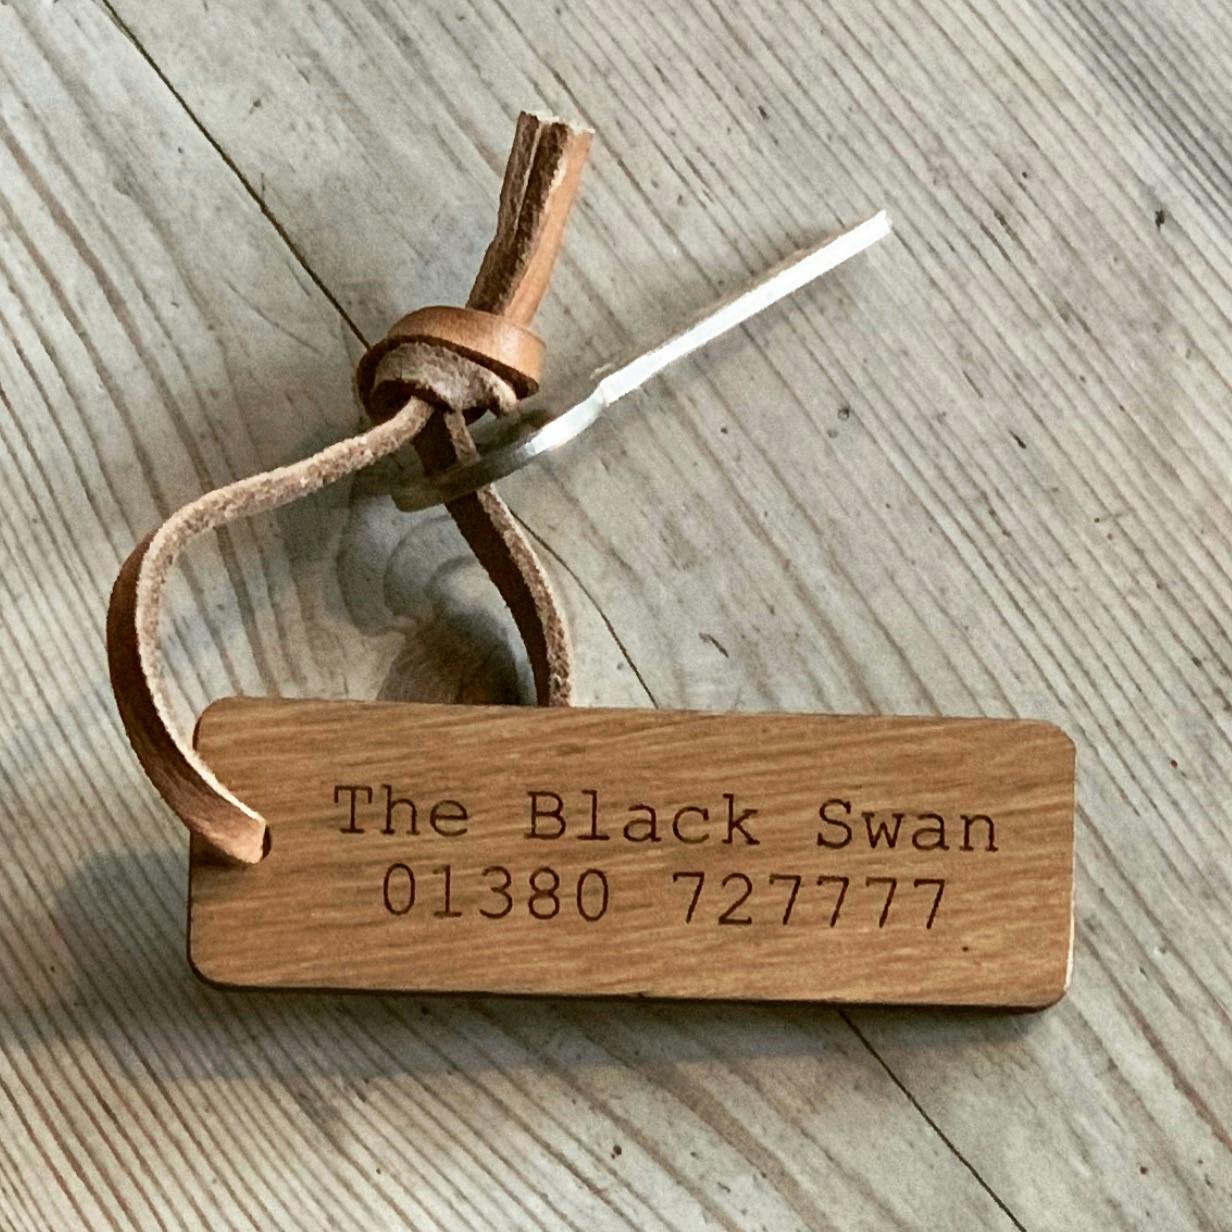 Room key at the black swan